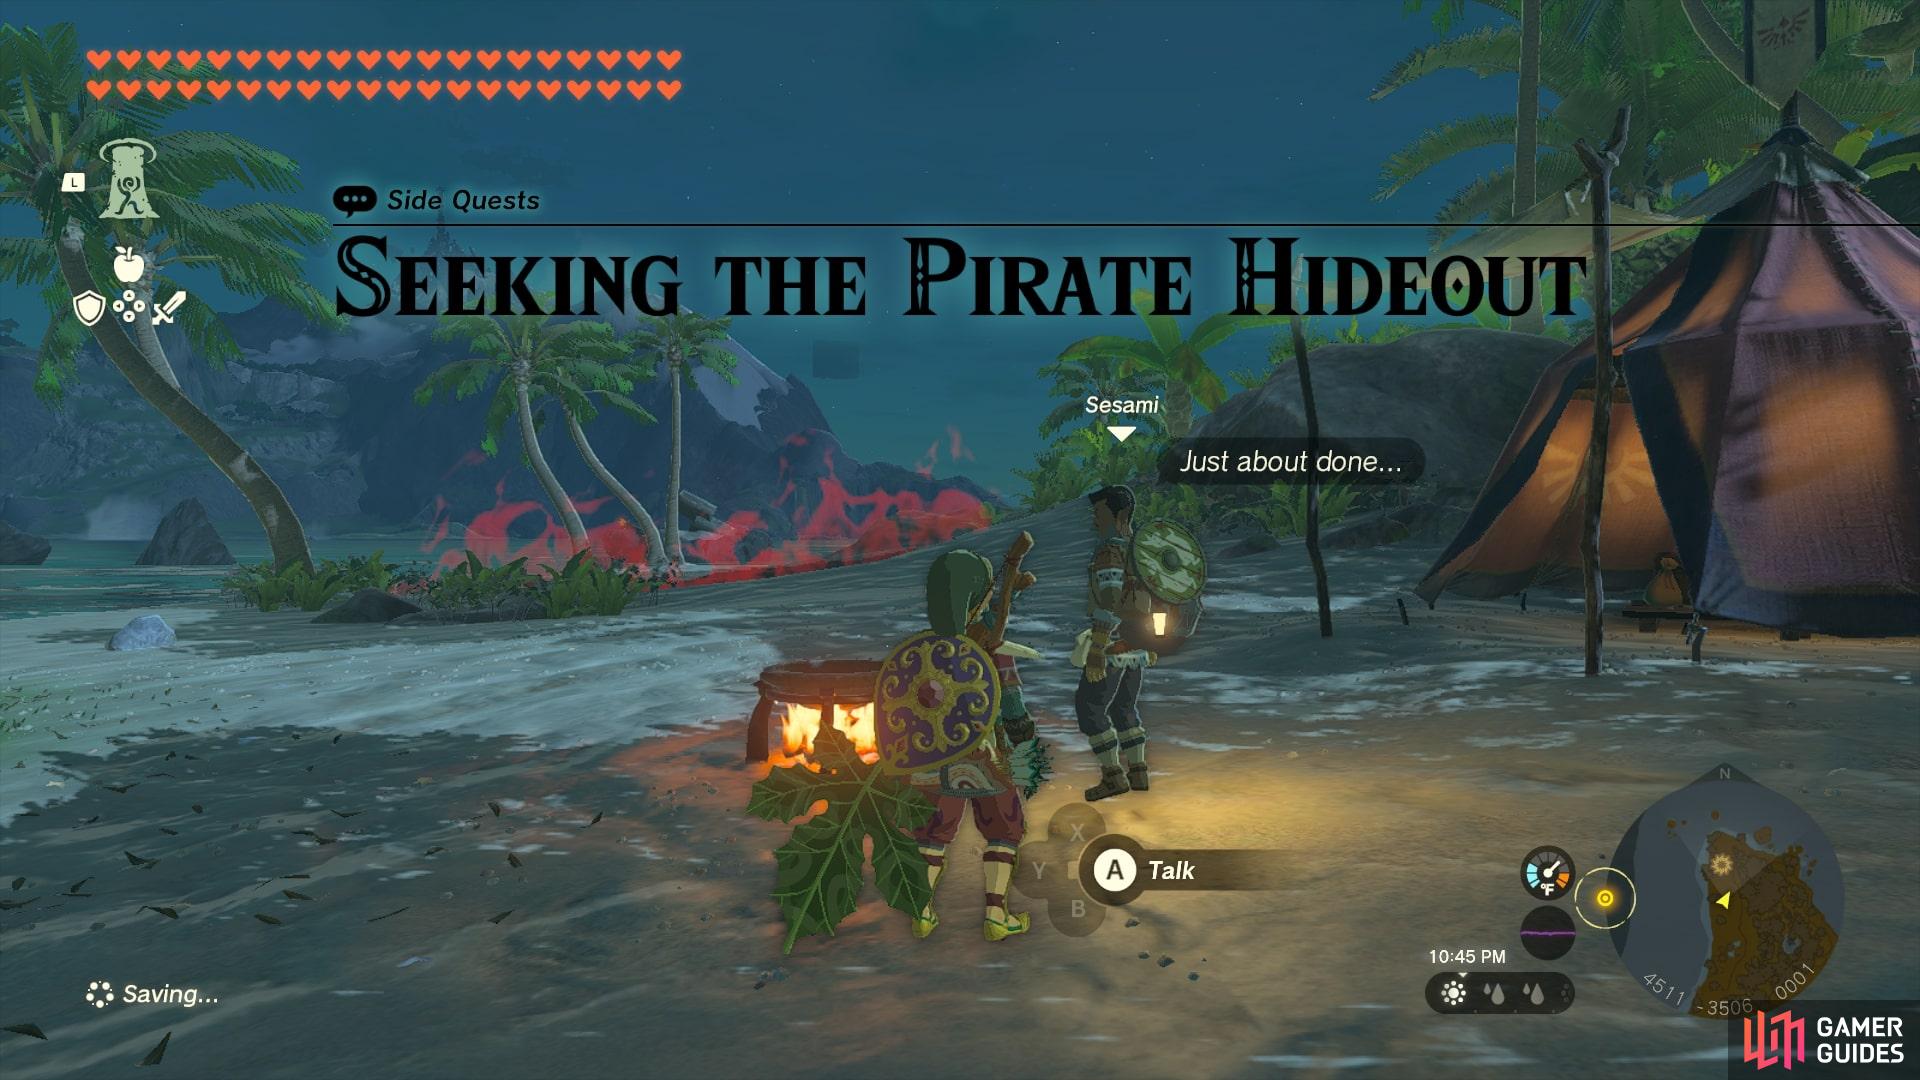 Speak with Sesami on Eventide Island to start Seeking The Pirate Hideout.